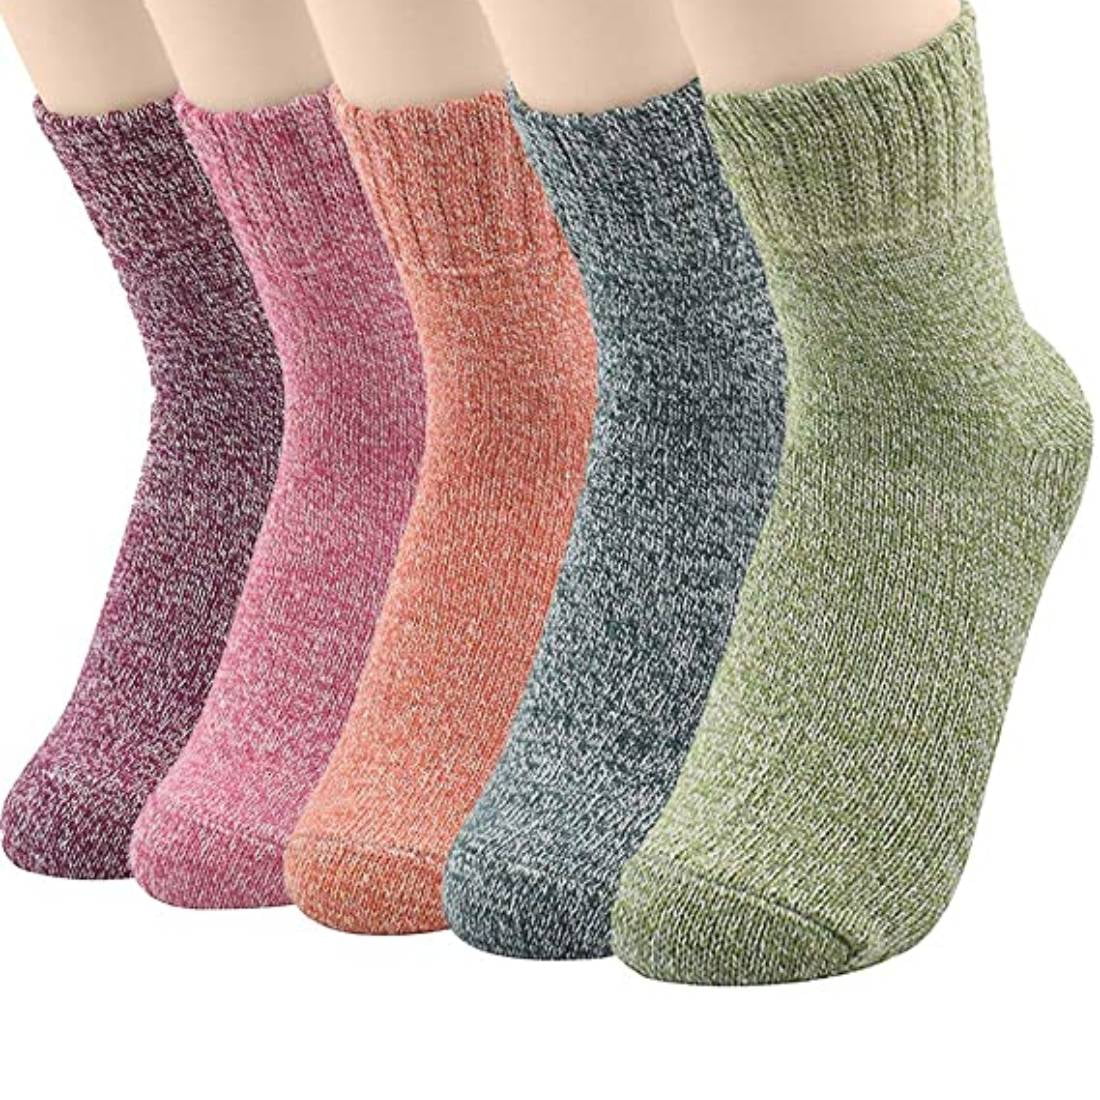 Womens Wool Socks for Cold Winter Vintage Style Wool Blend Knit Crew Socks for Women 